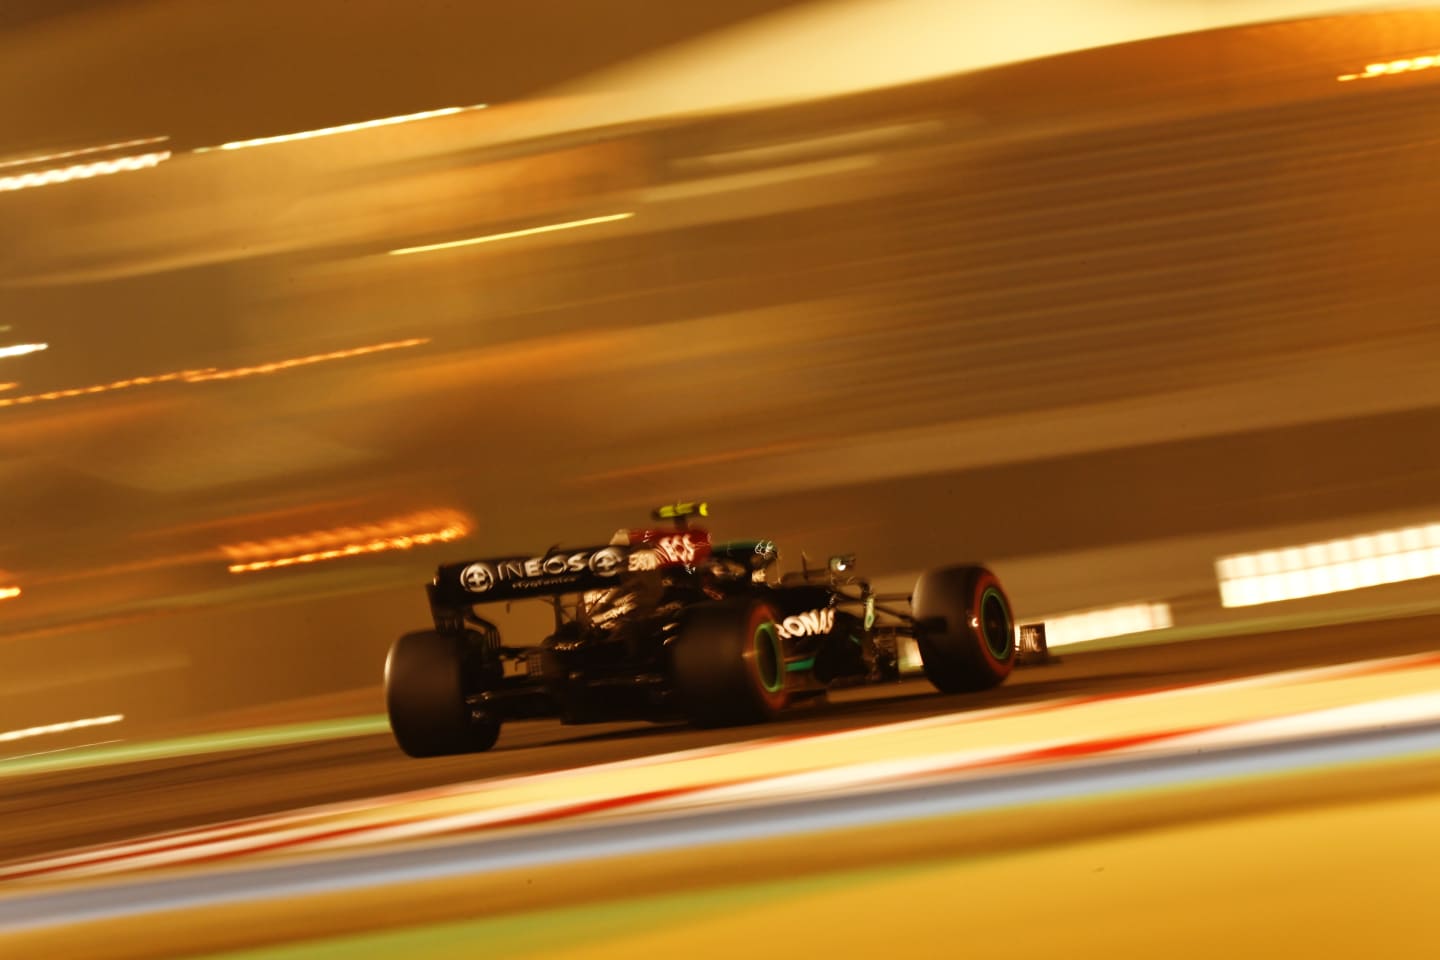 BAHRAIN, BAHRAIN - MARCH 13: Valtteri Bottas of Finland driving the (77) Mercedes AMG Petronas F1